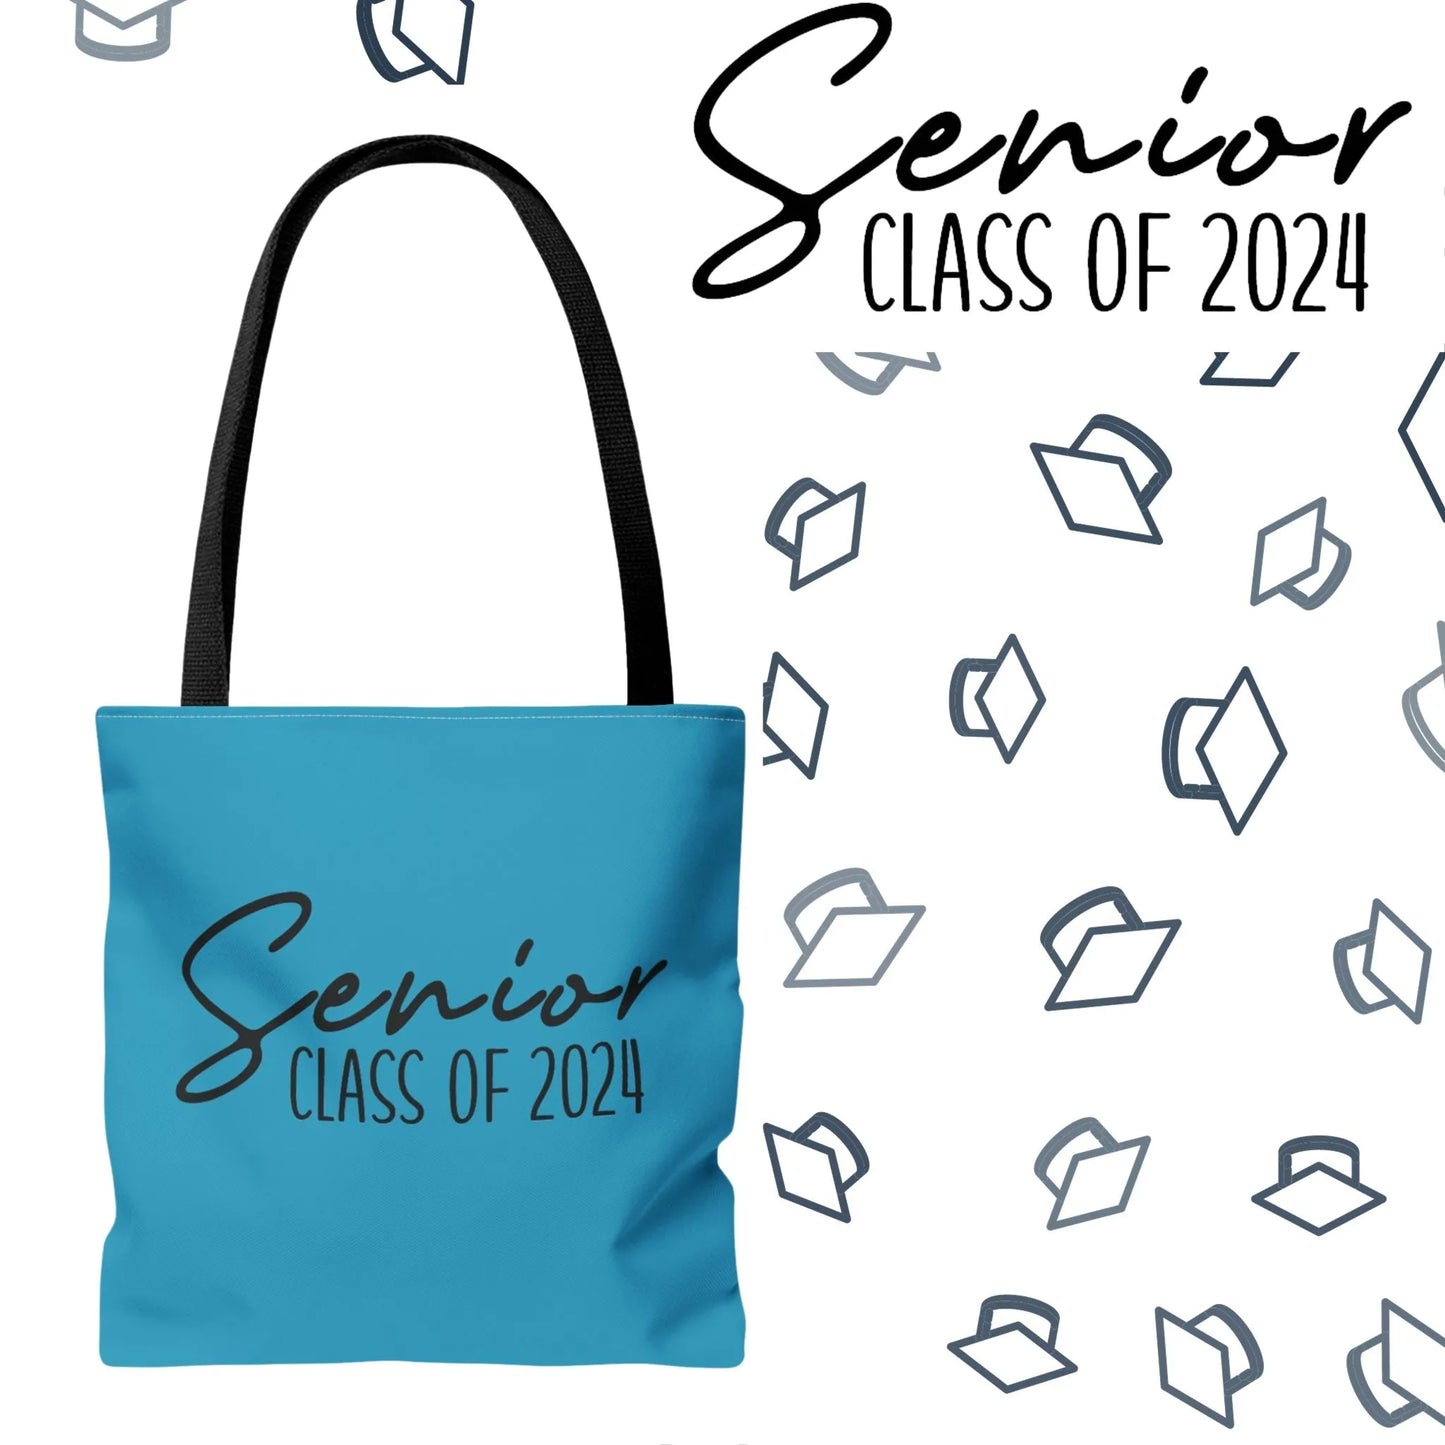 Senior Class of 2024 Tote Bag - Class of 2024 Tote Bag - Senior 2024 Tote Bag turquoise